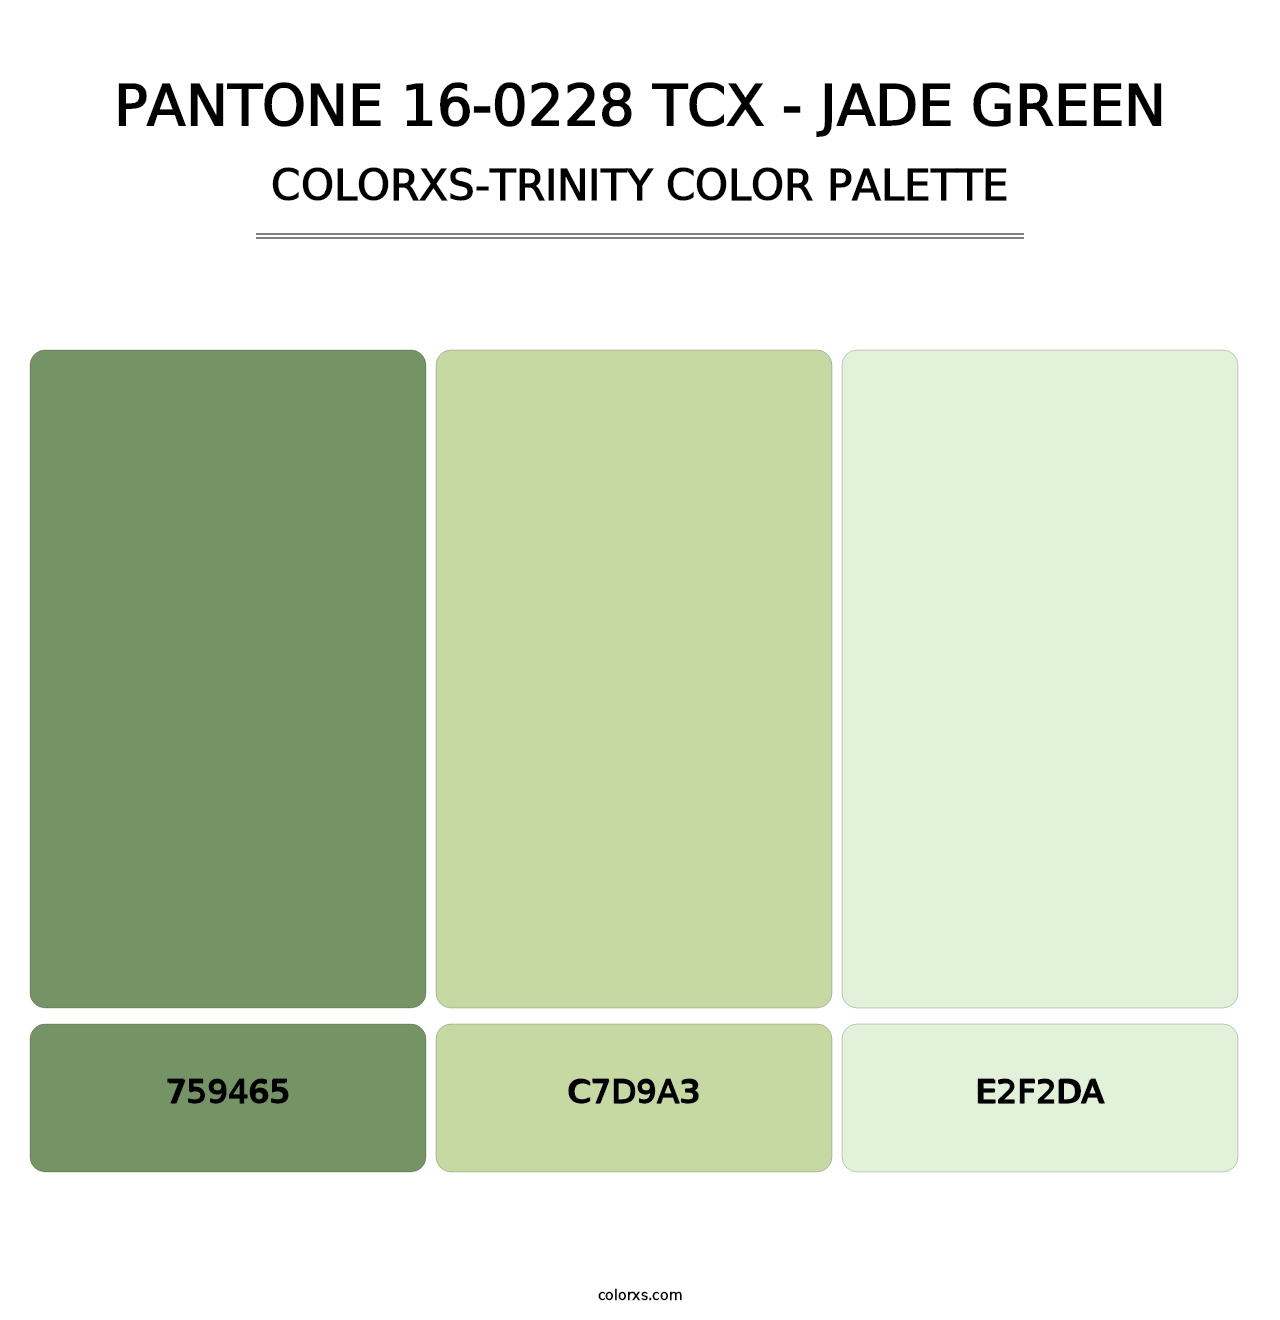 PANTONE 16-0228 TCX - Jade Green - Colorxs Trinity Palette